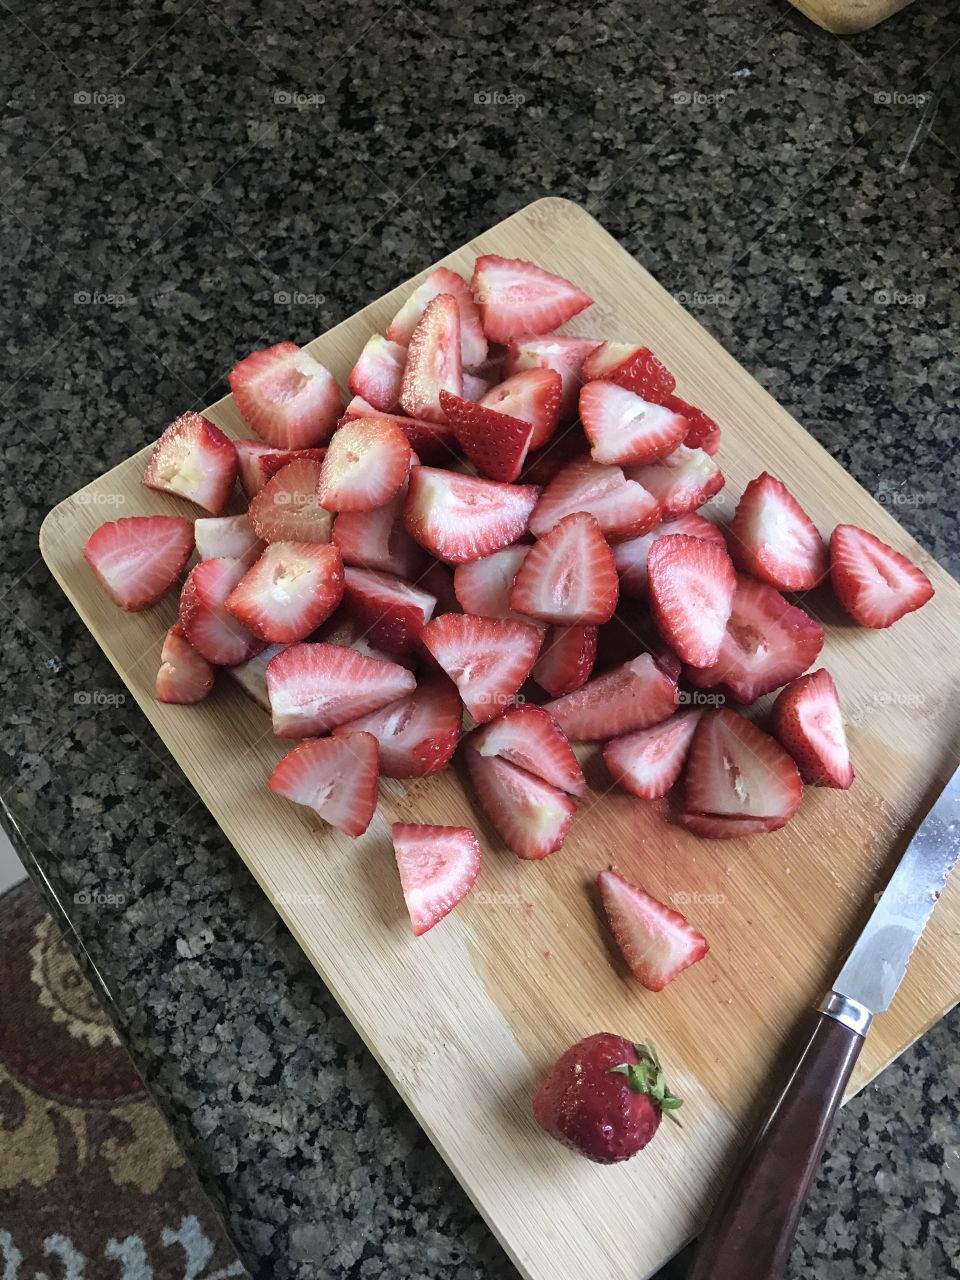 Summer strawberries